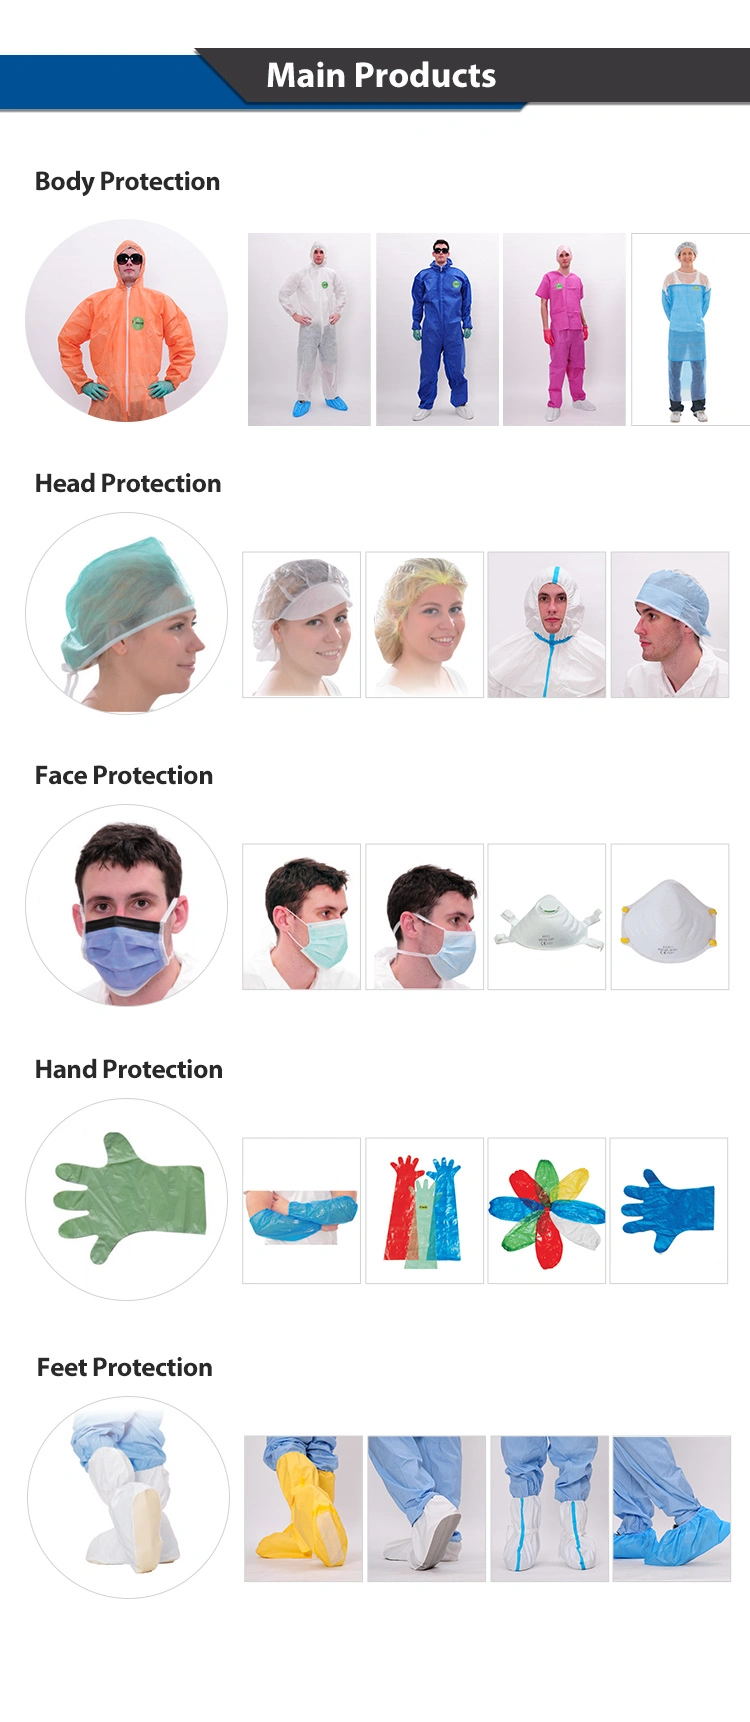 Dustproof Face Mask Non Woven Polypropylene PP From Raytex